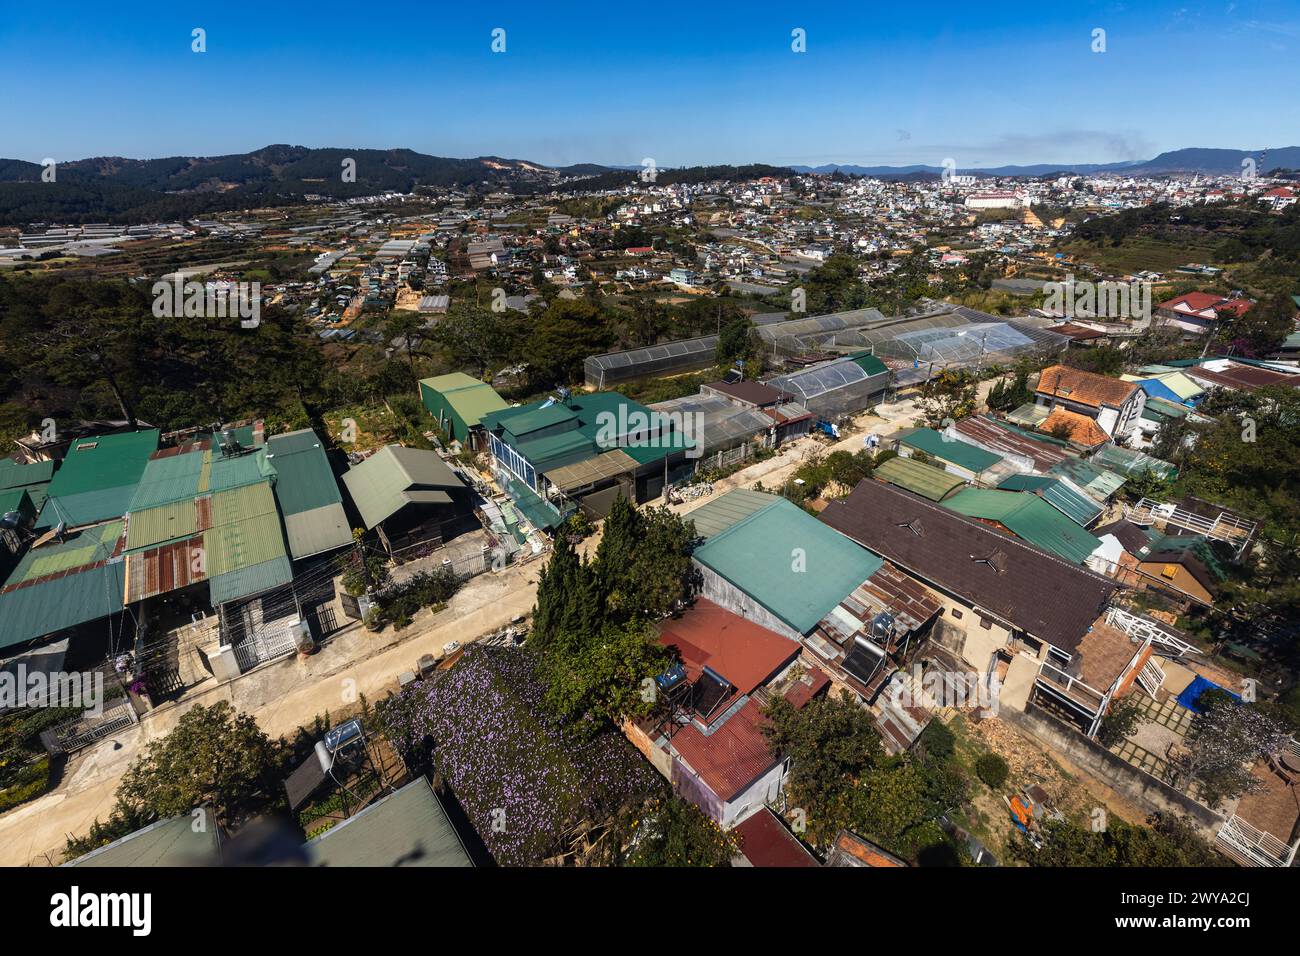 The city of Da Lat in Vietnam Stock Photo